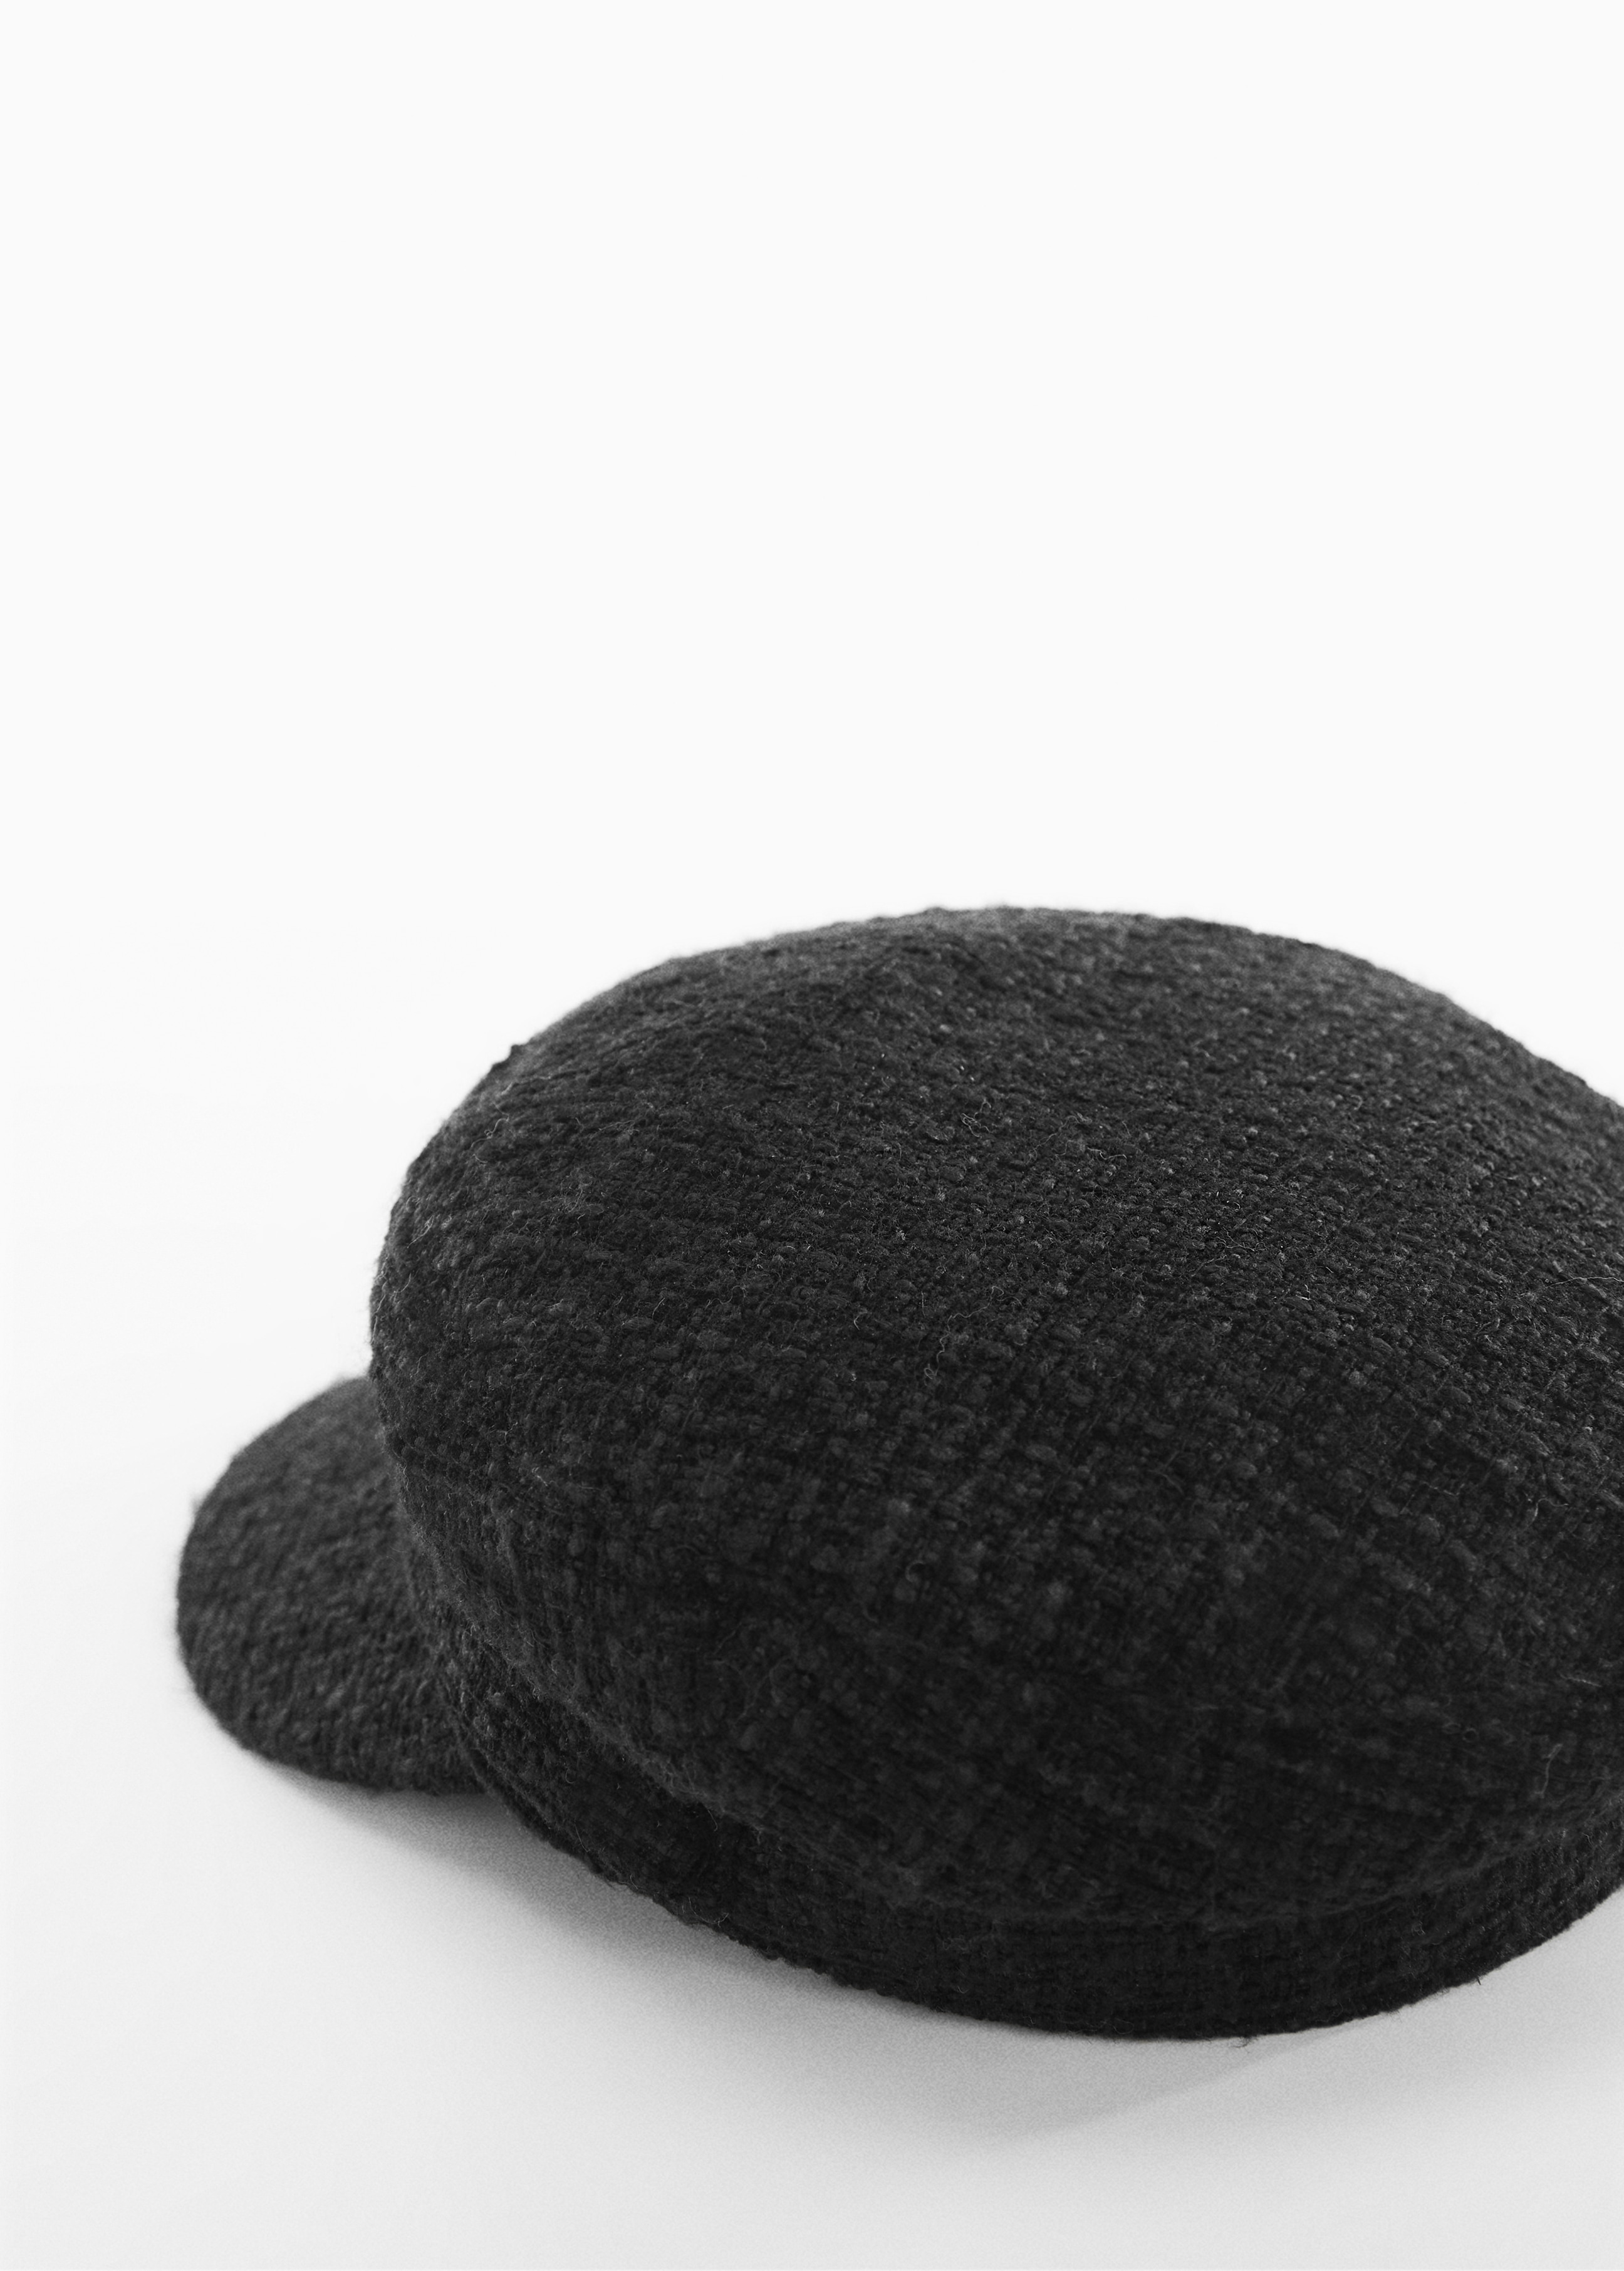 Tweed baker cap - Medium plane